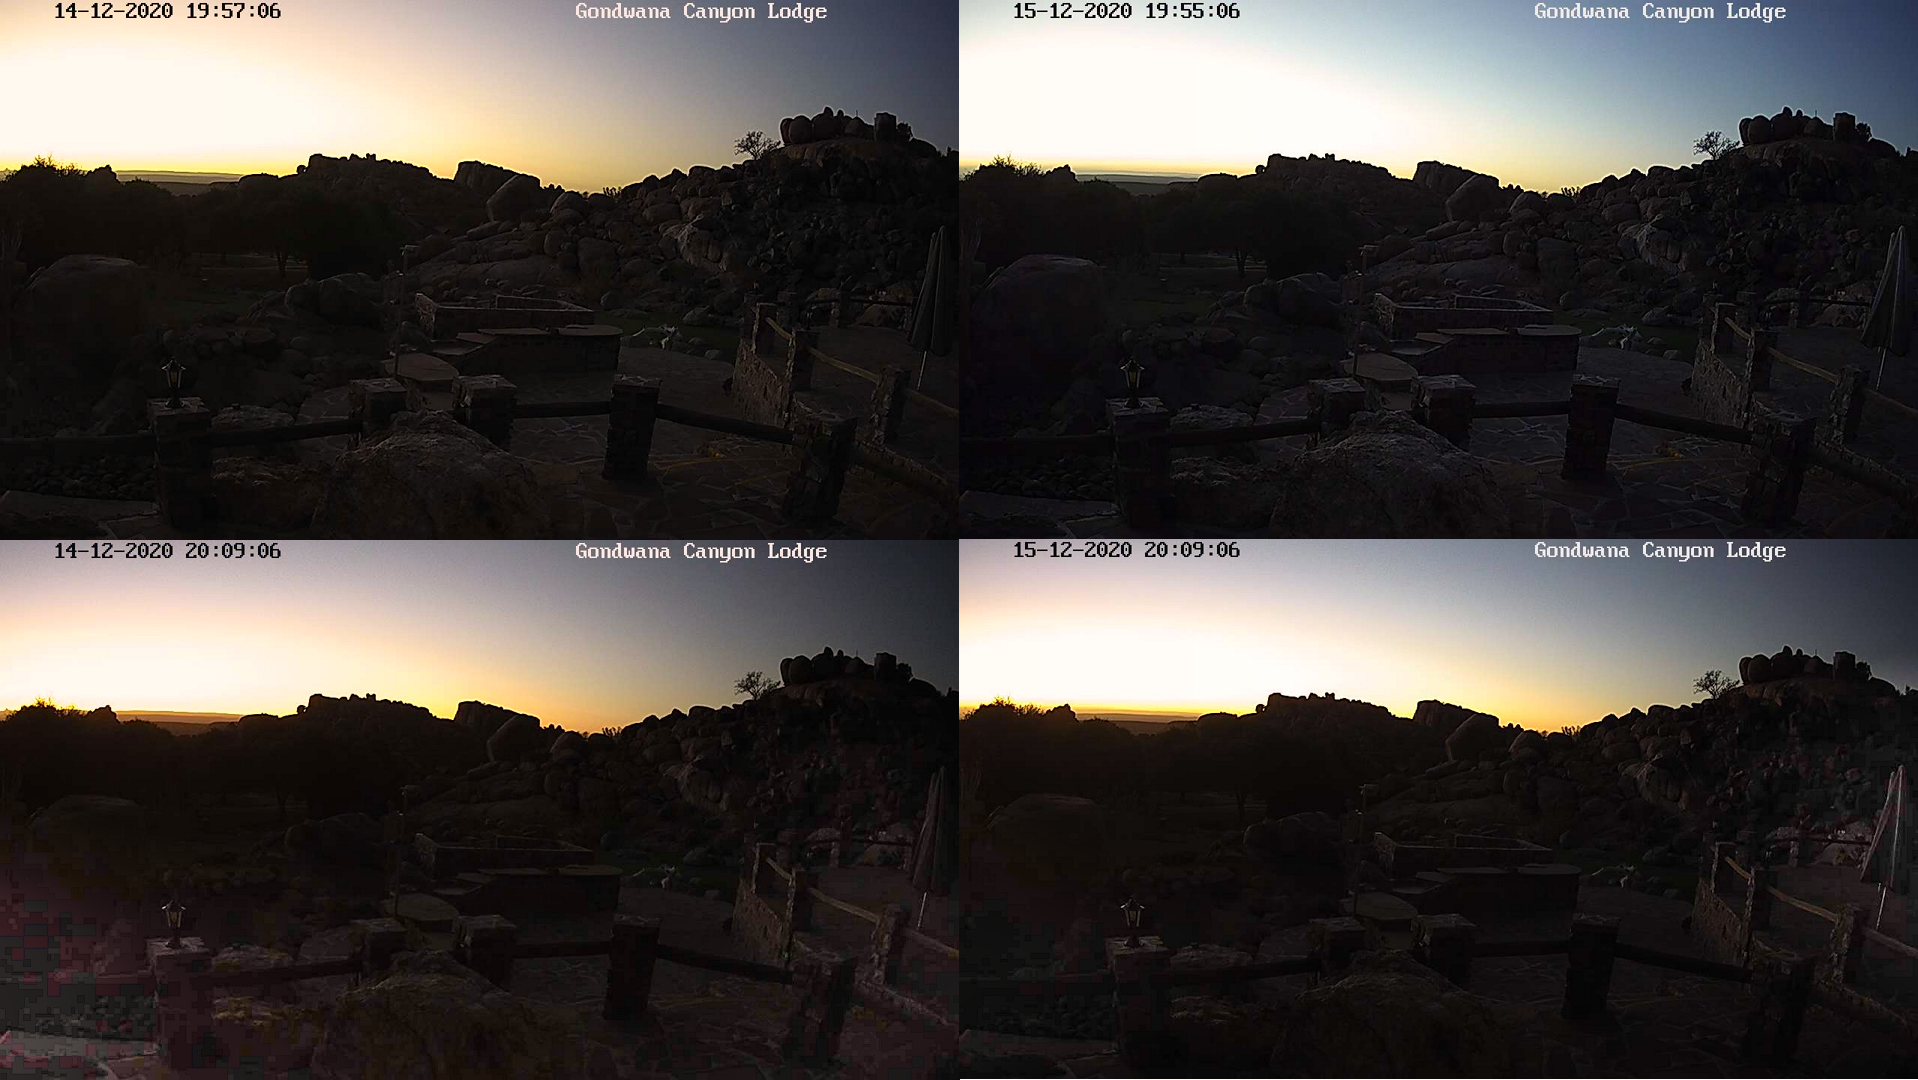 Gondwana Canyon Lodge, solar eclipse below the horizon Dec, 2020 3